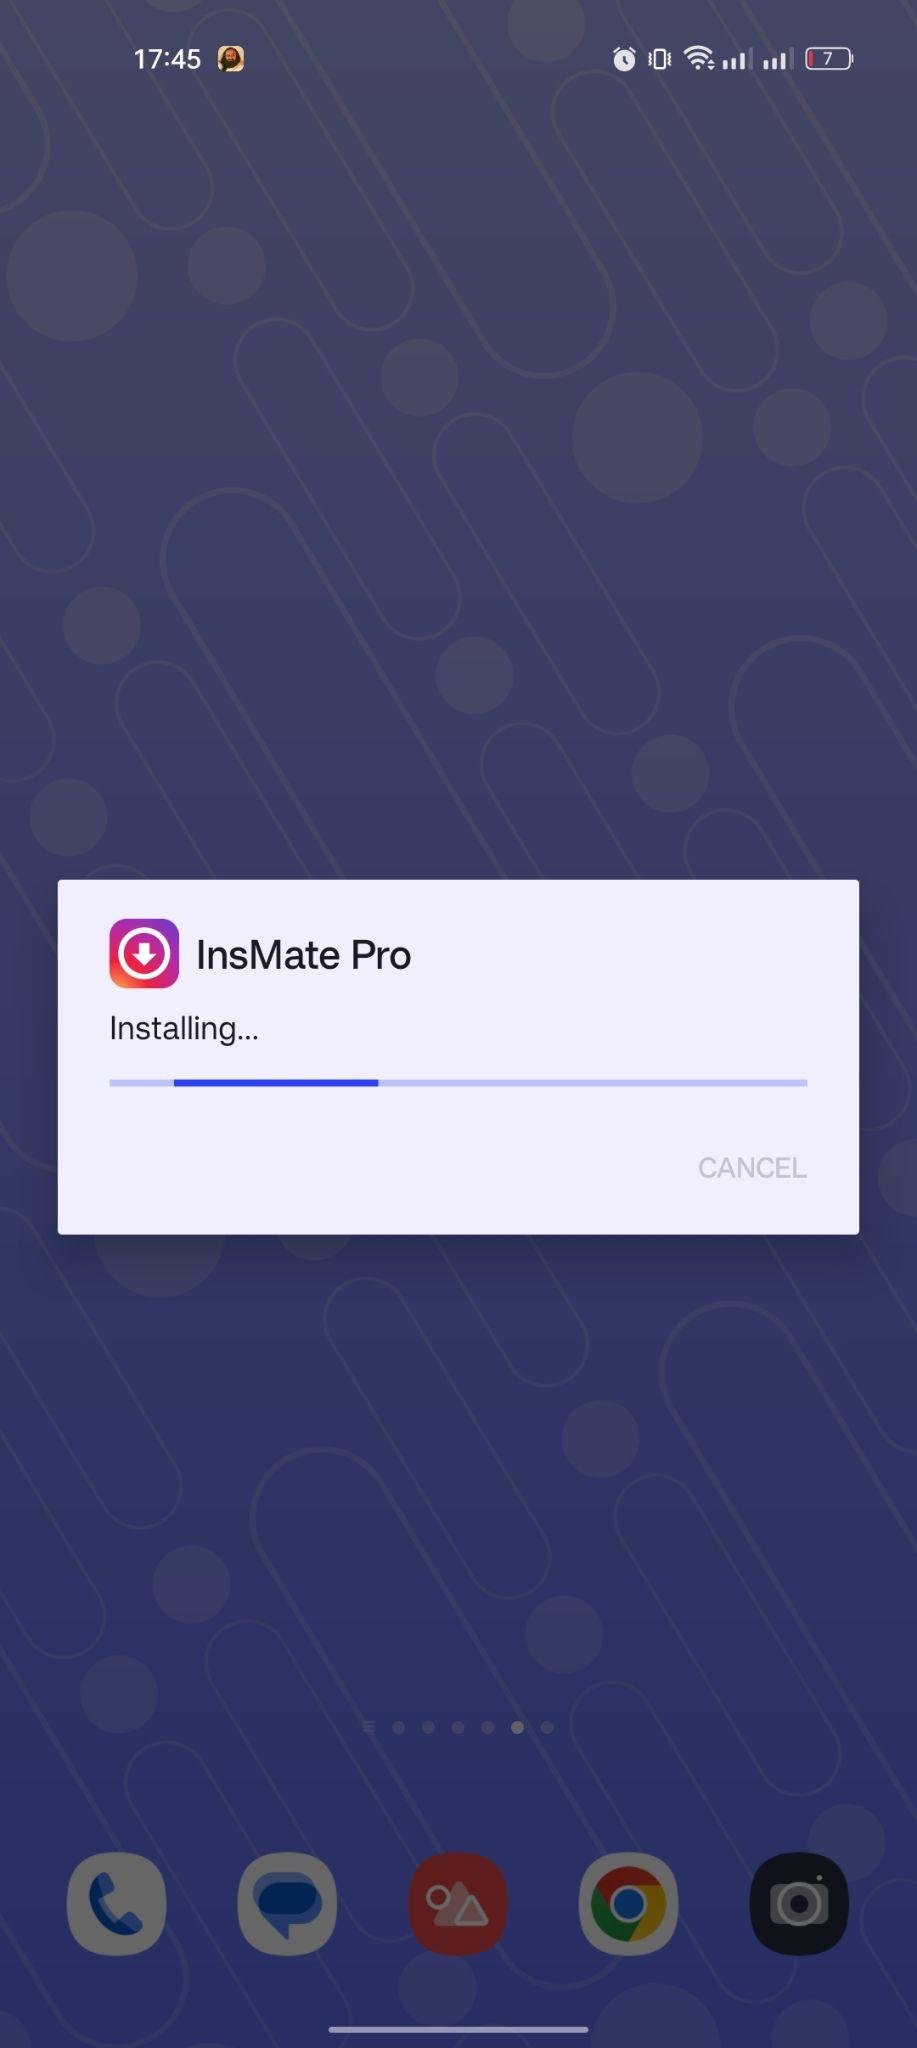 InsMate Pro apk installing